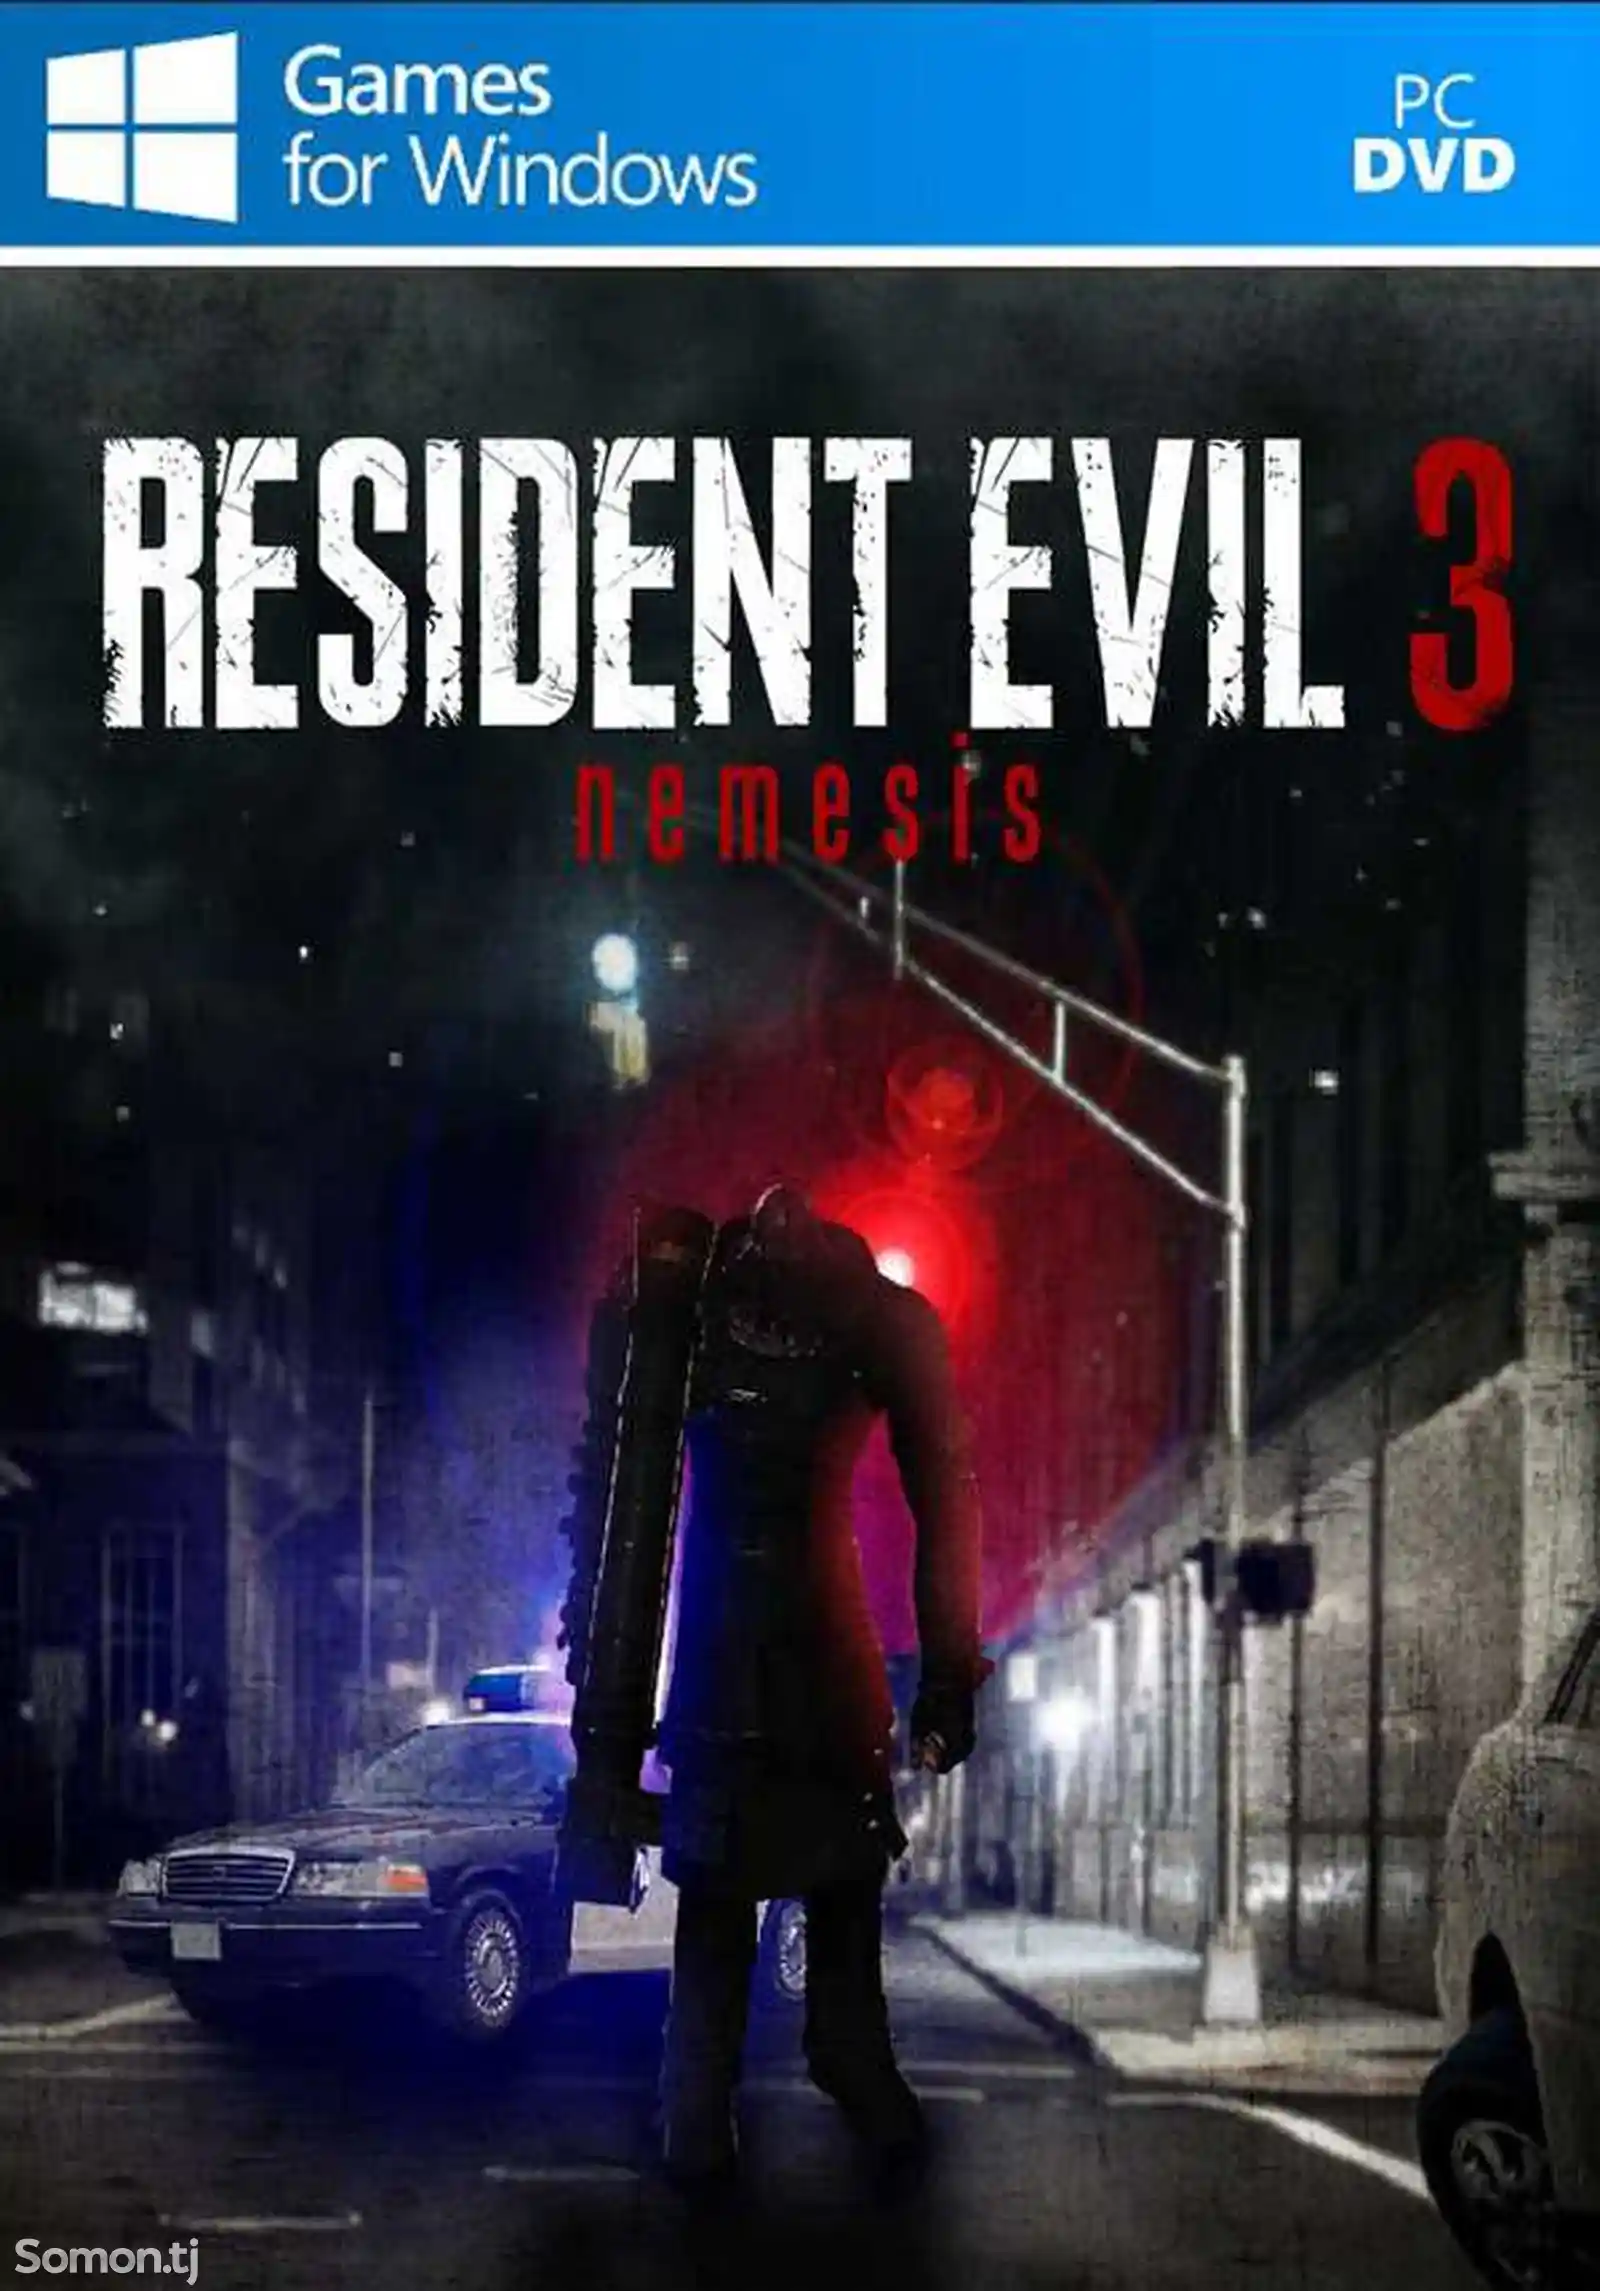 Игра Rezident evil 3 для компьютера-пк-pc-1